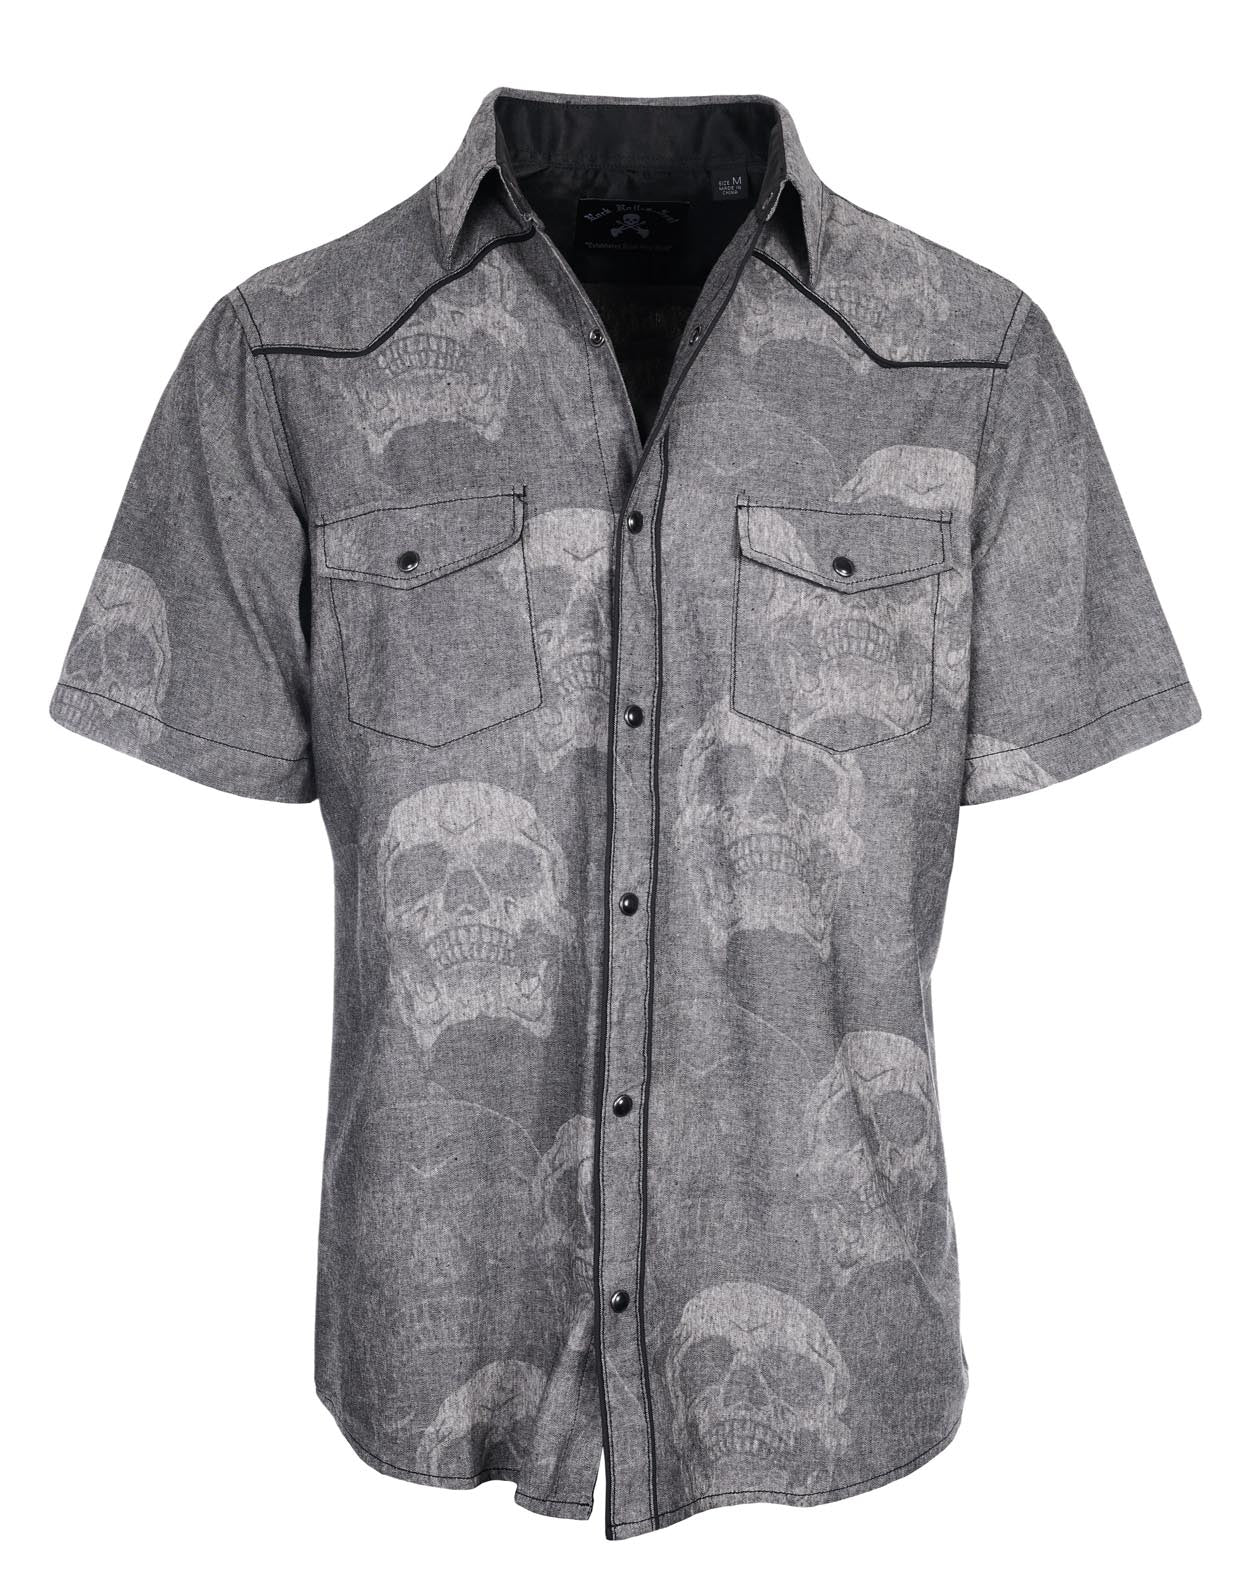 Men's SS Western Button Up Shirt | Fade Away Black Rock Roll n Soul